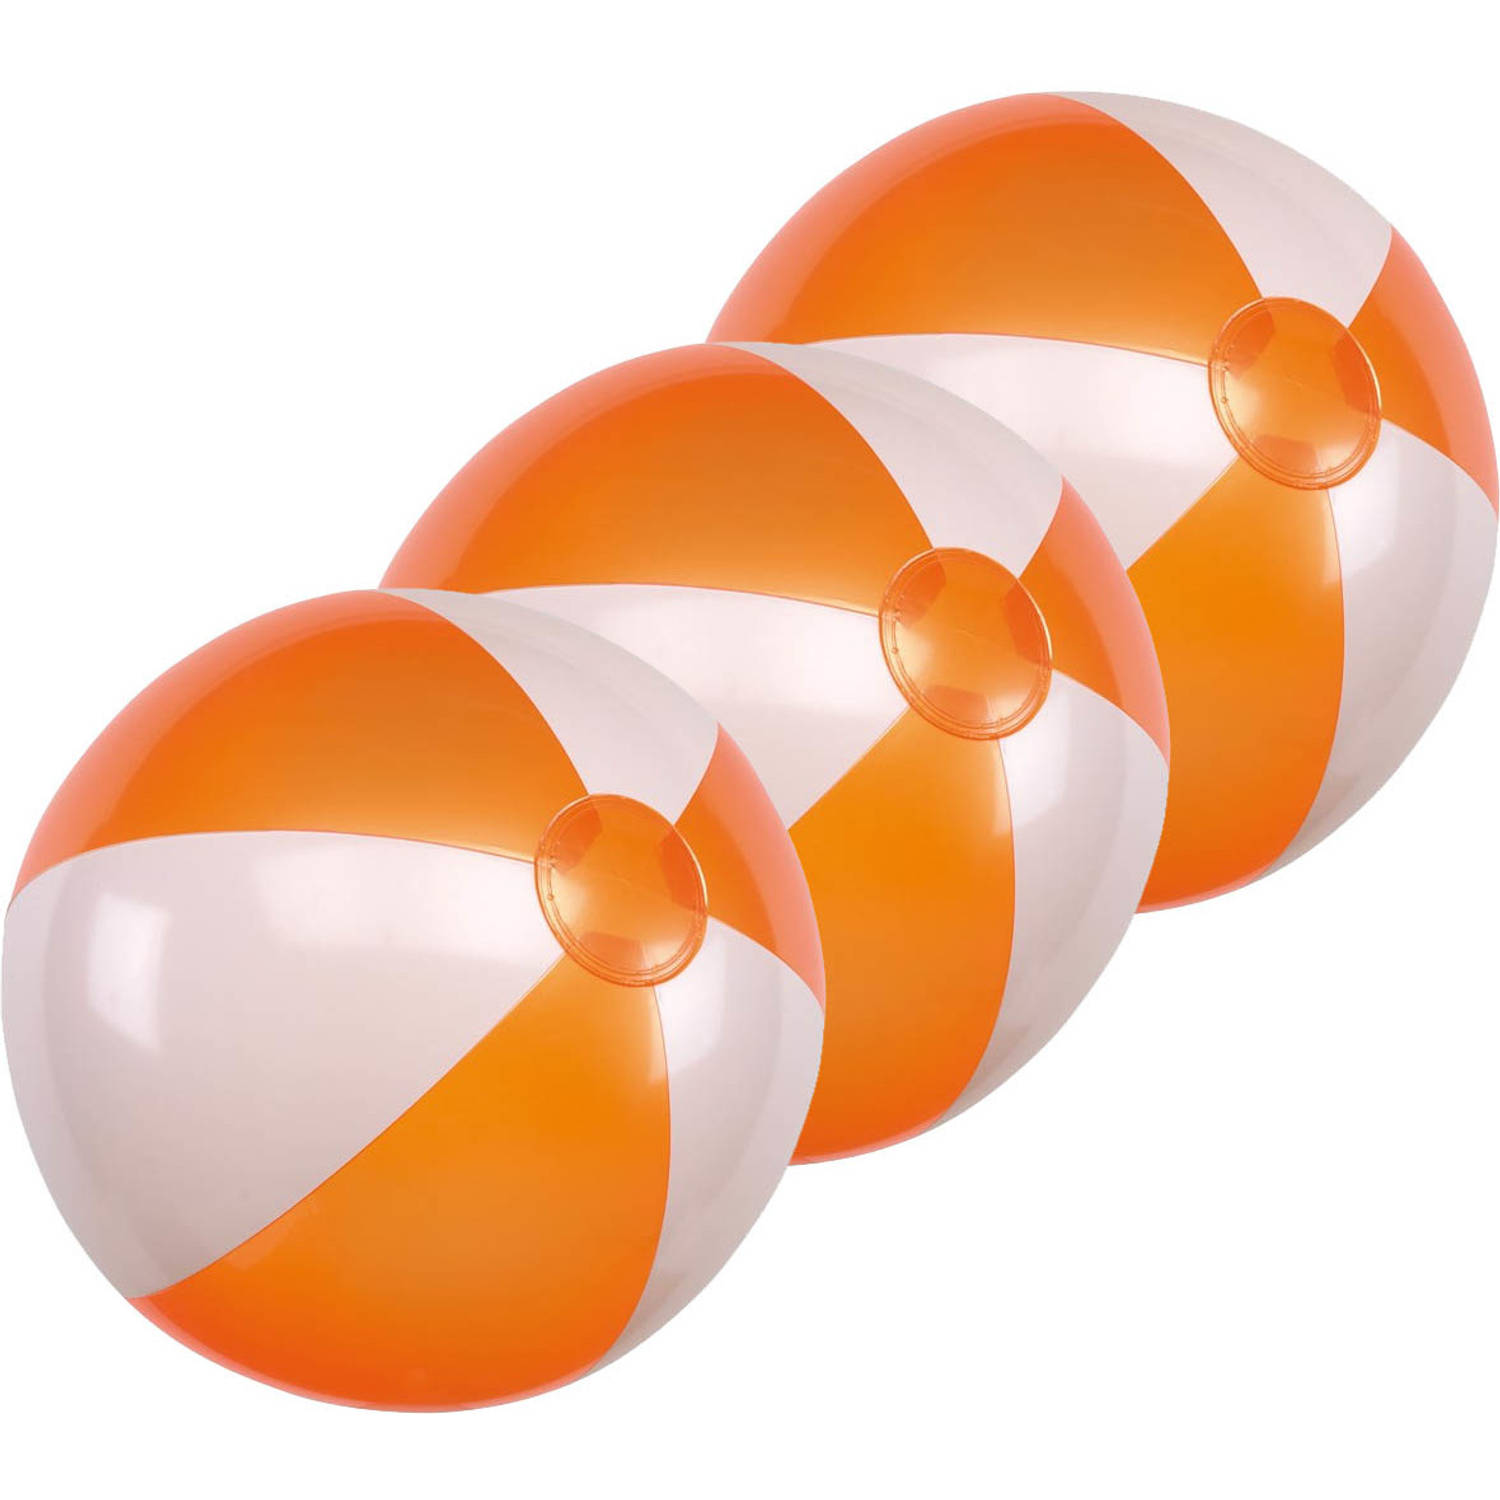 3x Opblaasbare Strandballen Oranje-wit 28 Cm Speelgoed Strandballen